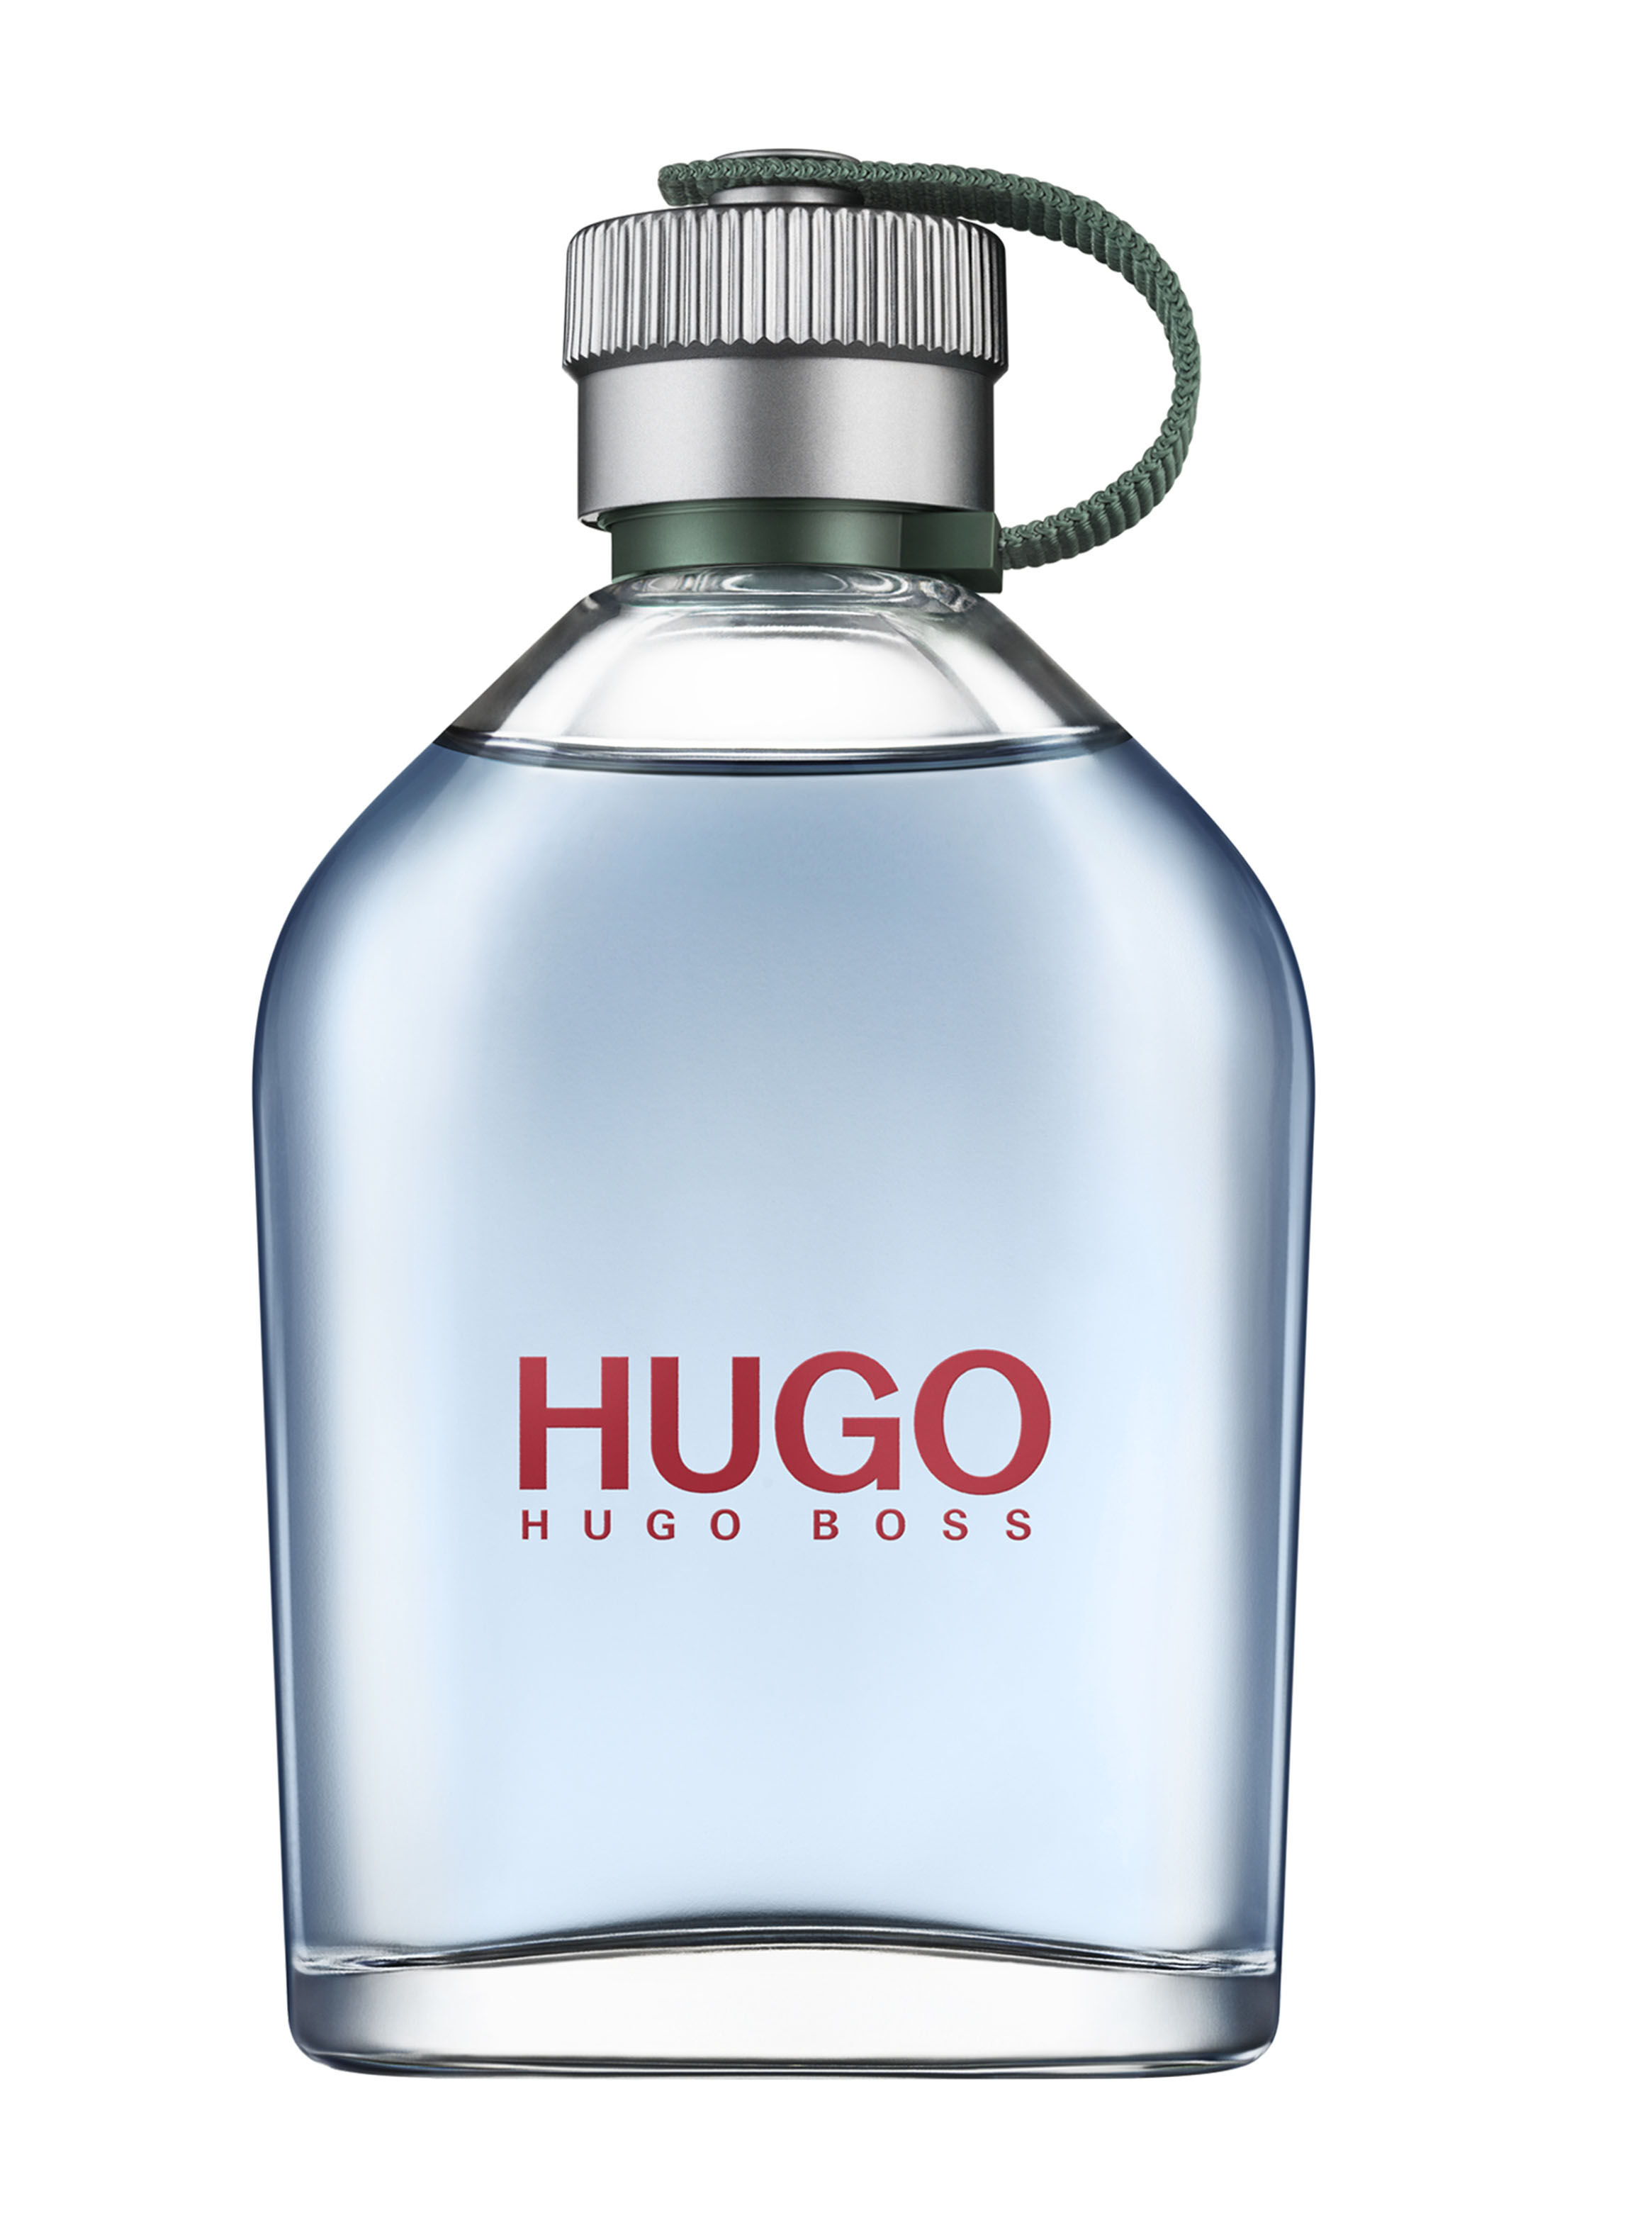 Boss hugo boss описание аромата. Hugo Boss Hugo extreme. Hugo Boss Hugo extreme EDP 75 ml-. Hugo Boss Hugo man extreme. Мужская туалетная вода бренд Хуго босс.